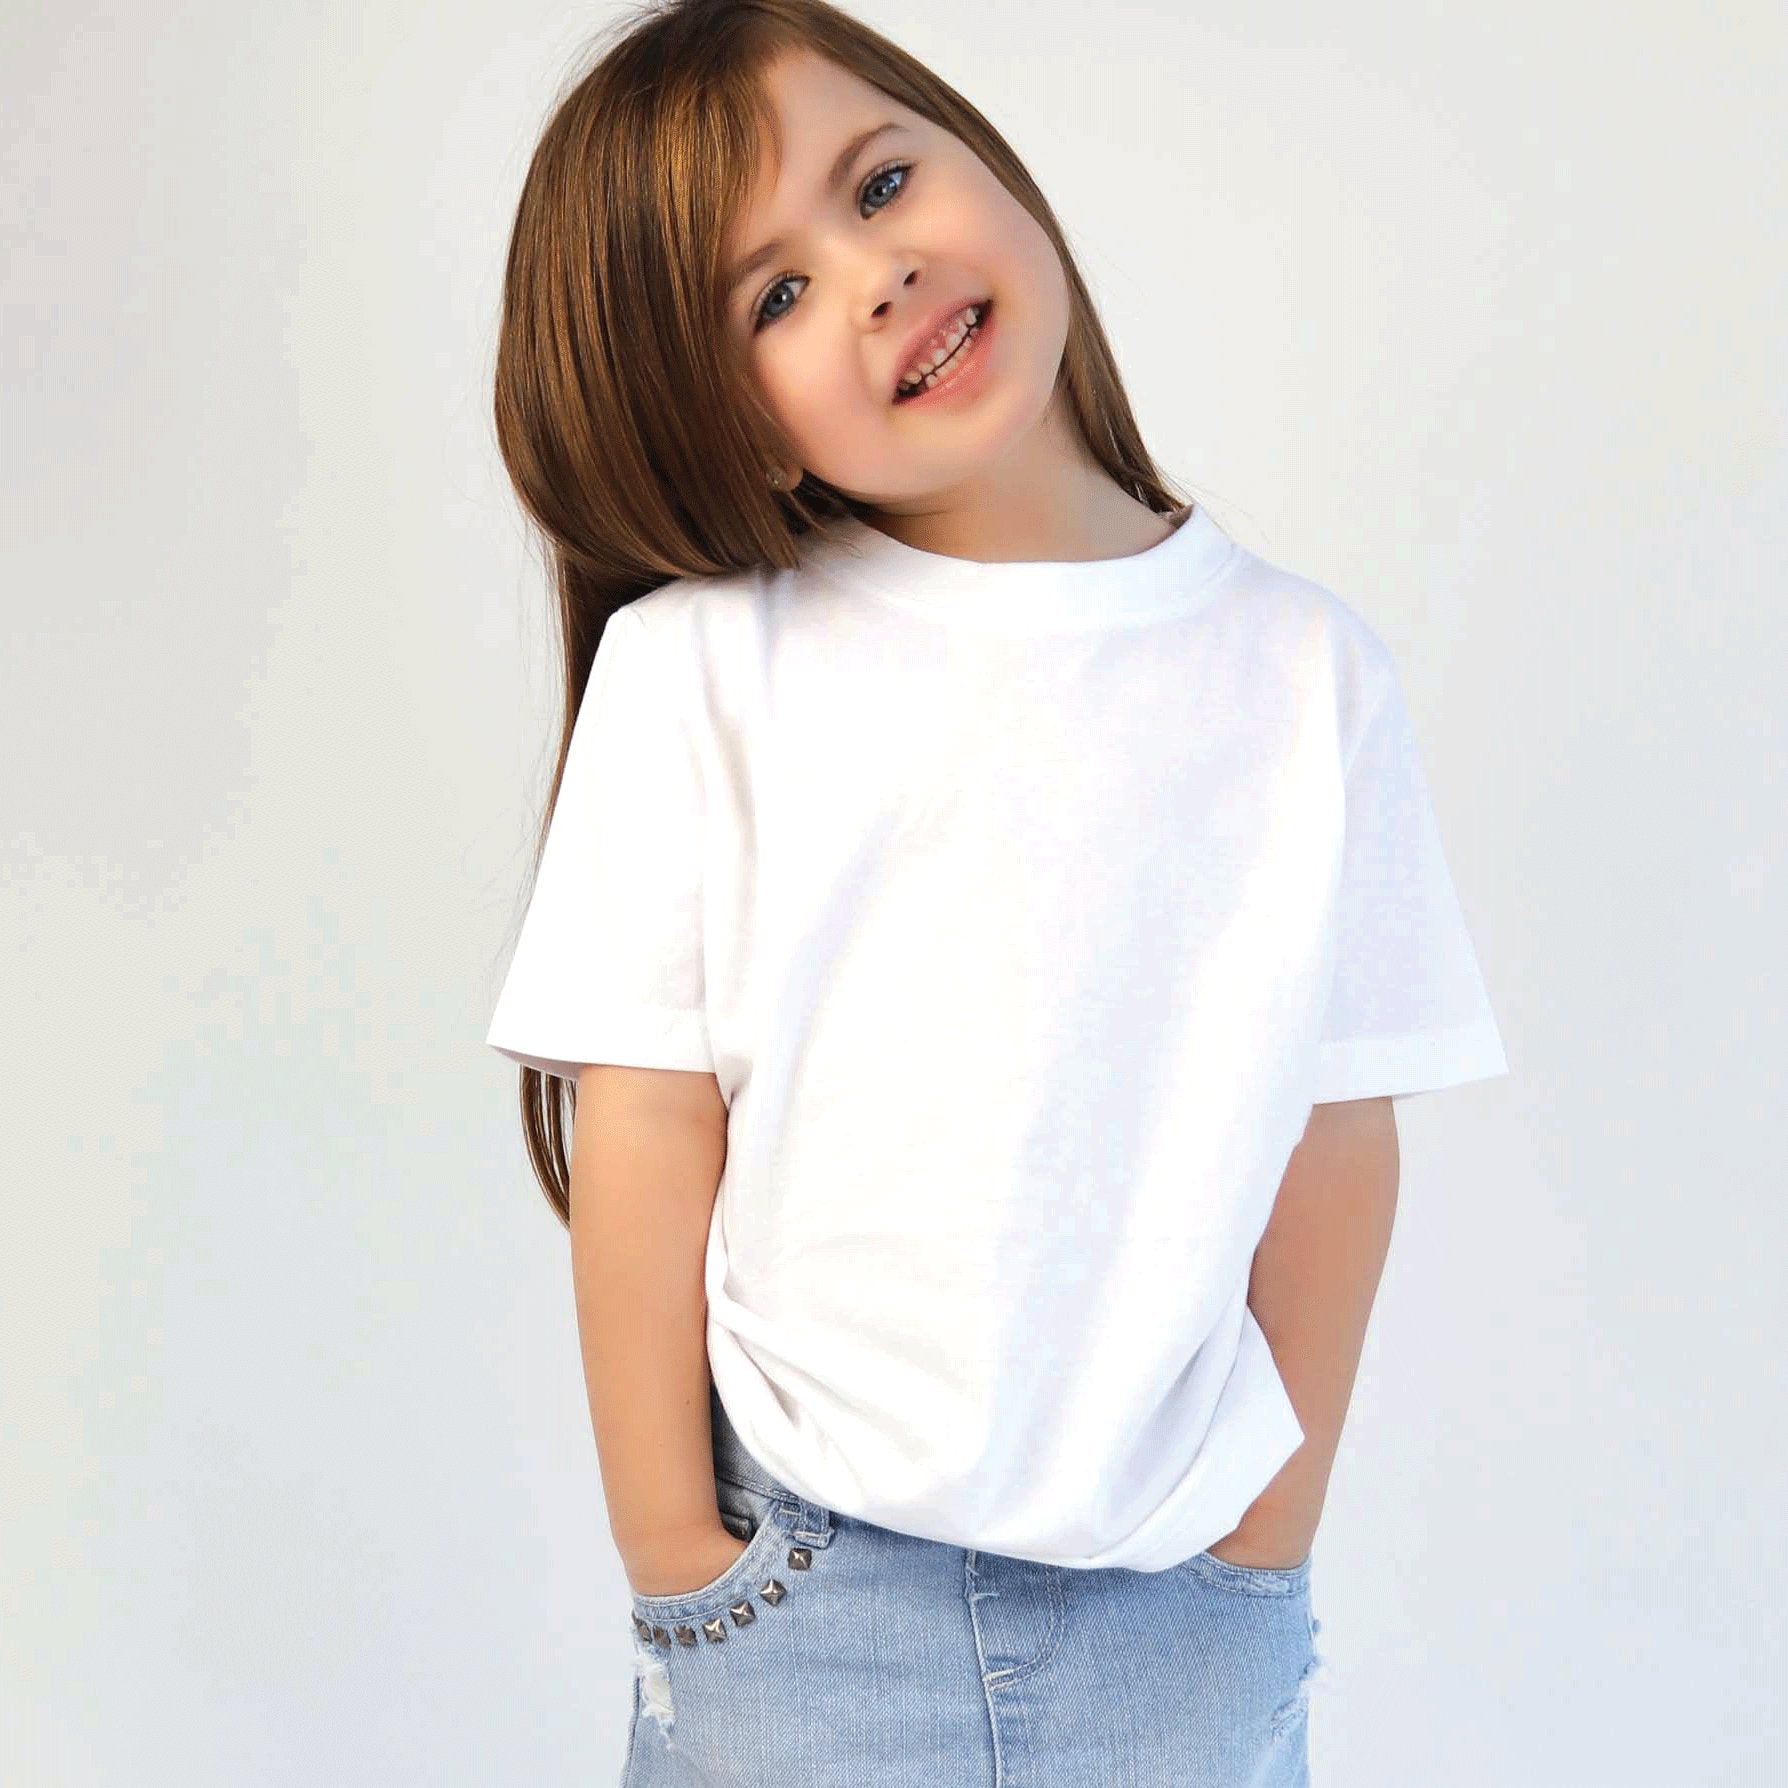 Childrens Long Sleeve T 100% Cotton Basic Round Neck Long Sleeve Boys Girls Kids & Toddler T-Shirt 